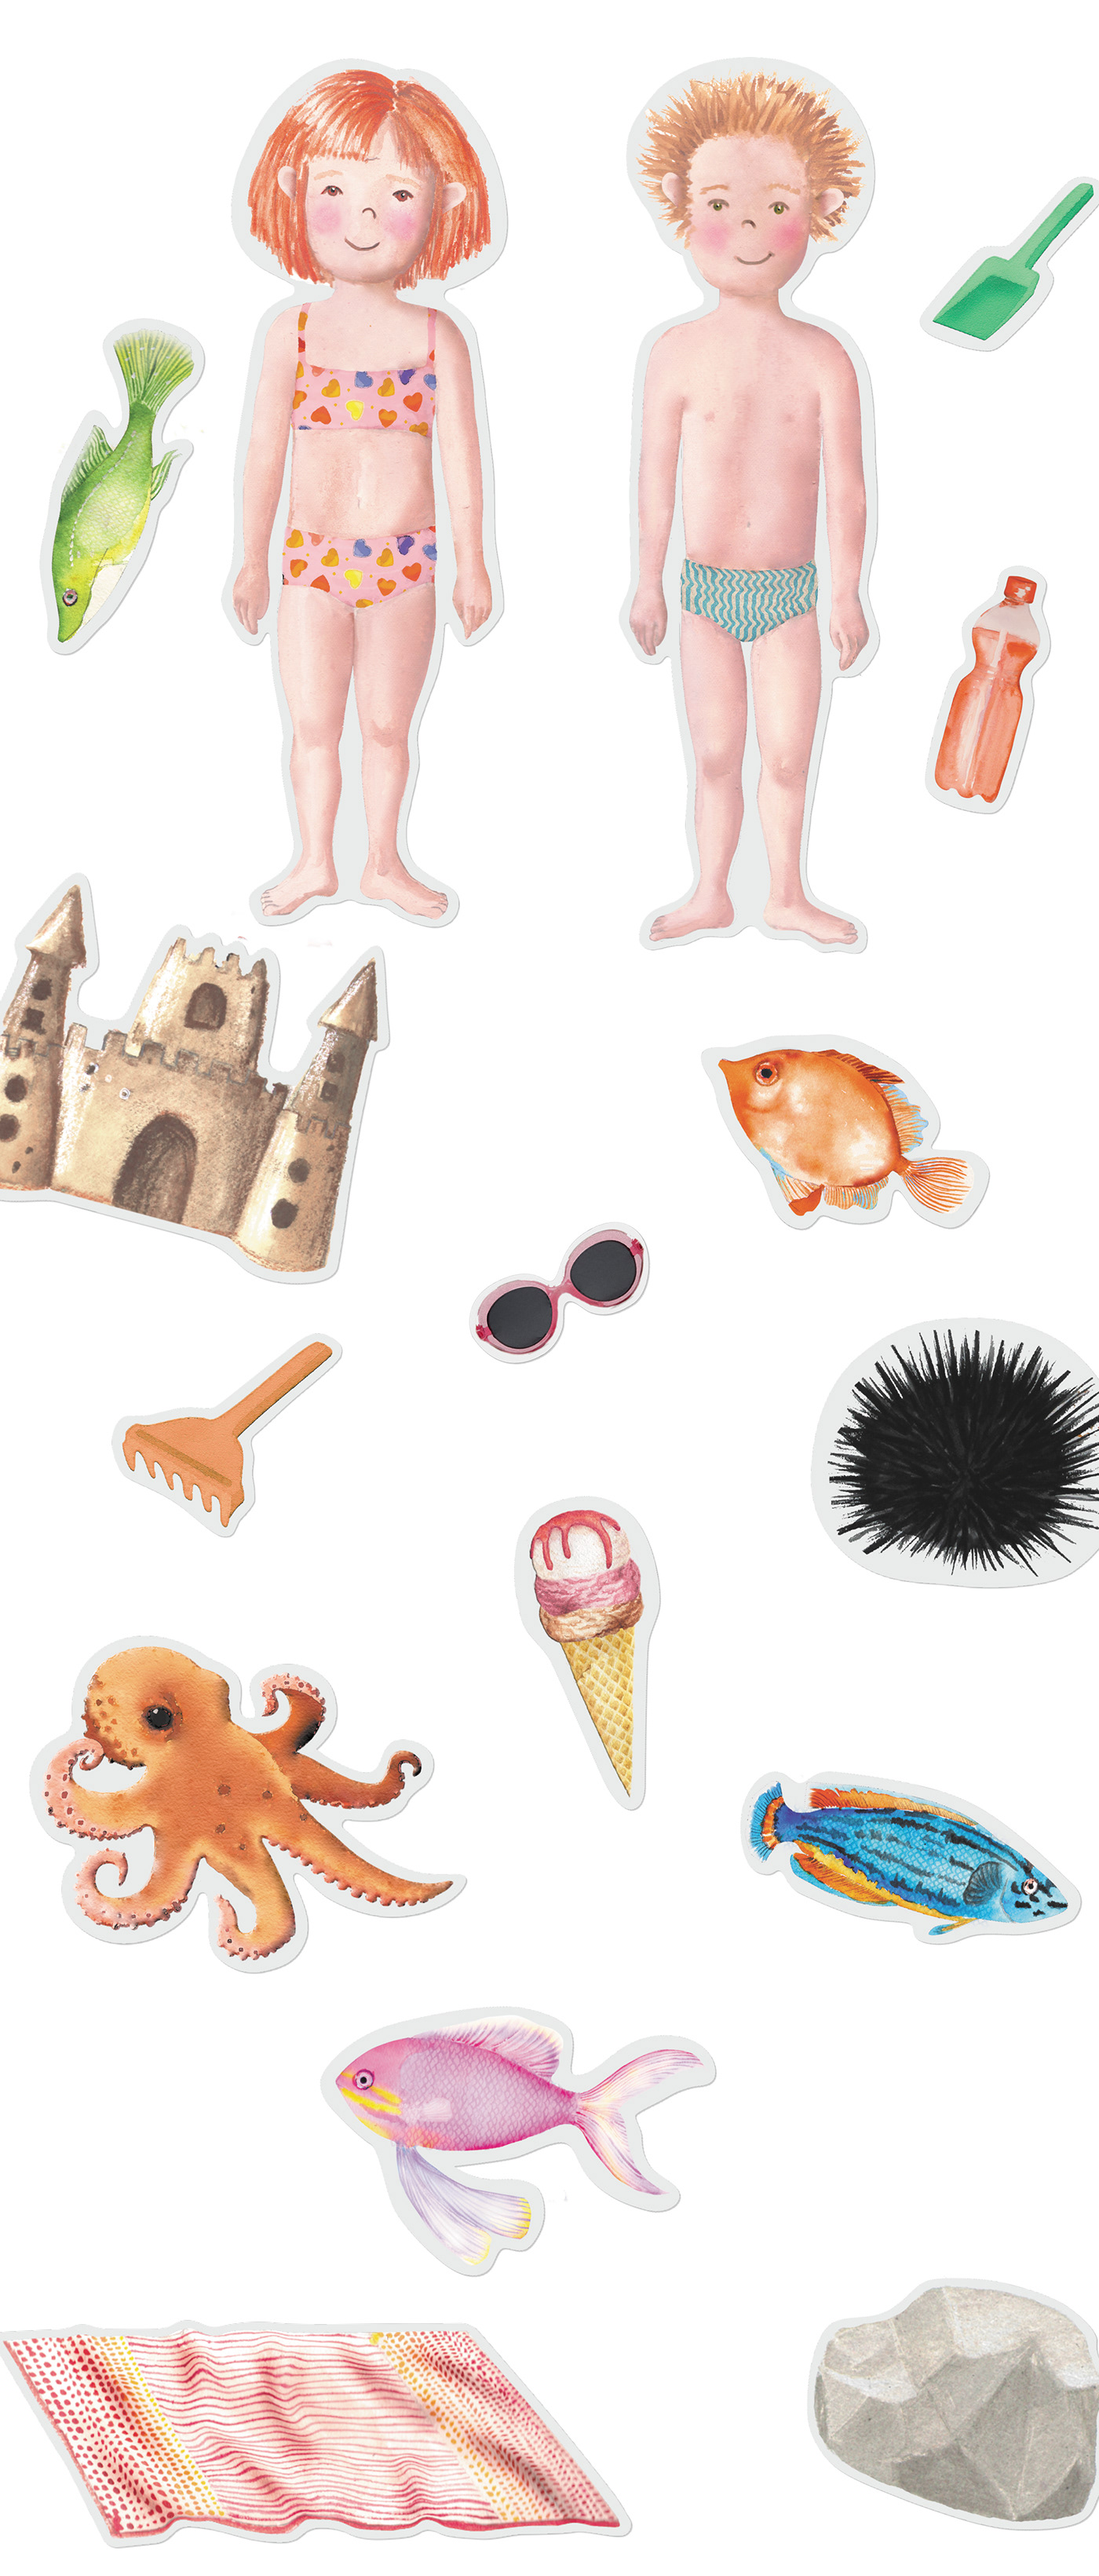 toy ILLUSTRATION  speech therapy slp language children Aid Board game